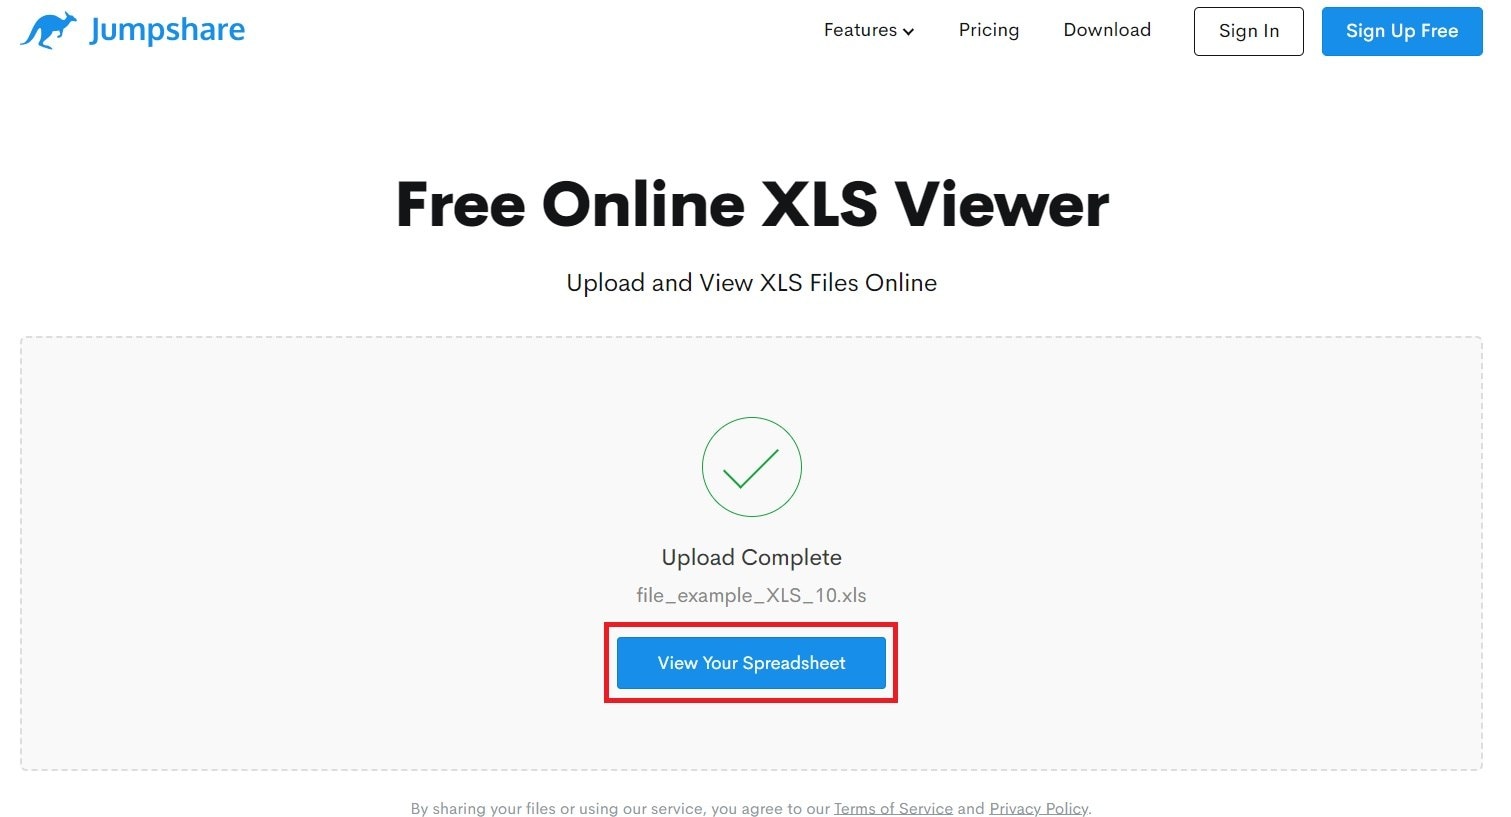 open xls online free in jumpshare xls viewer